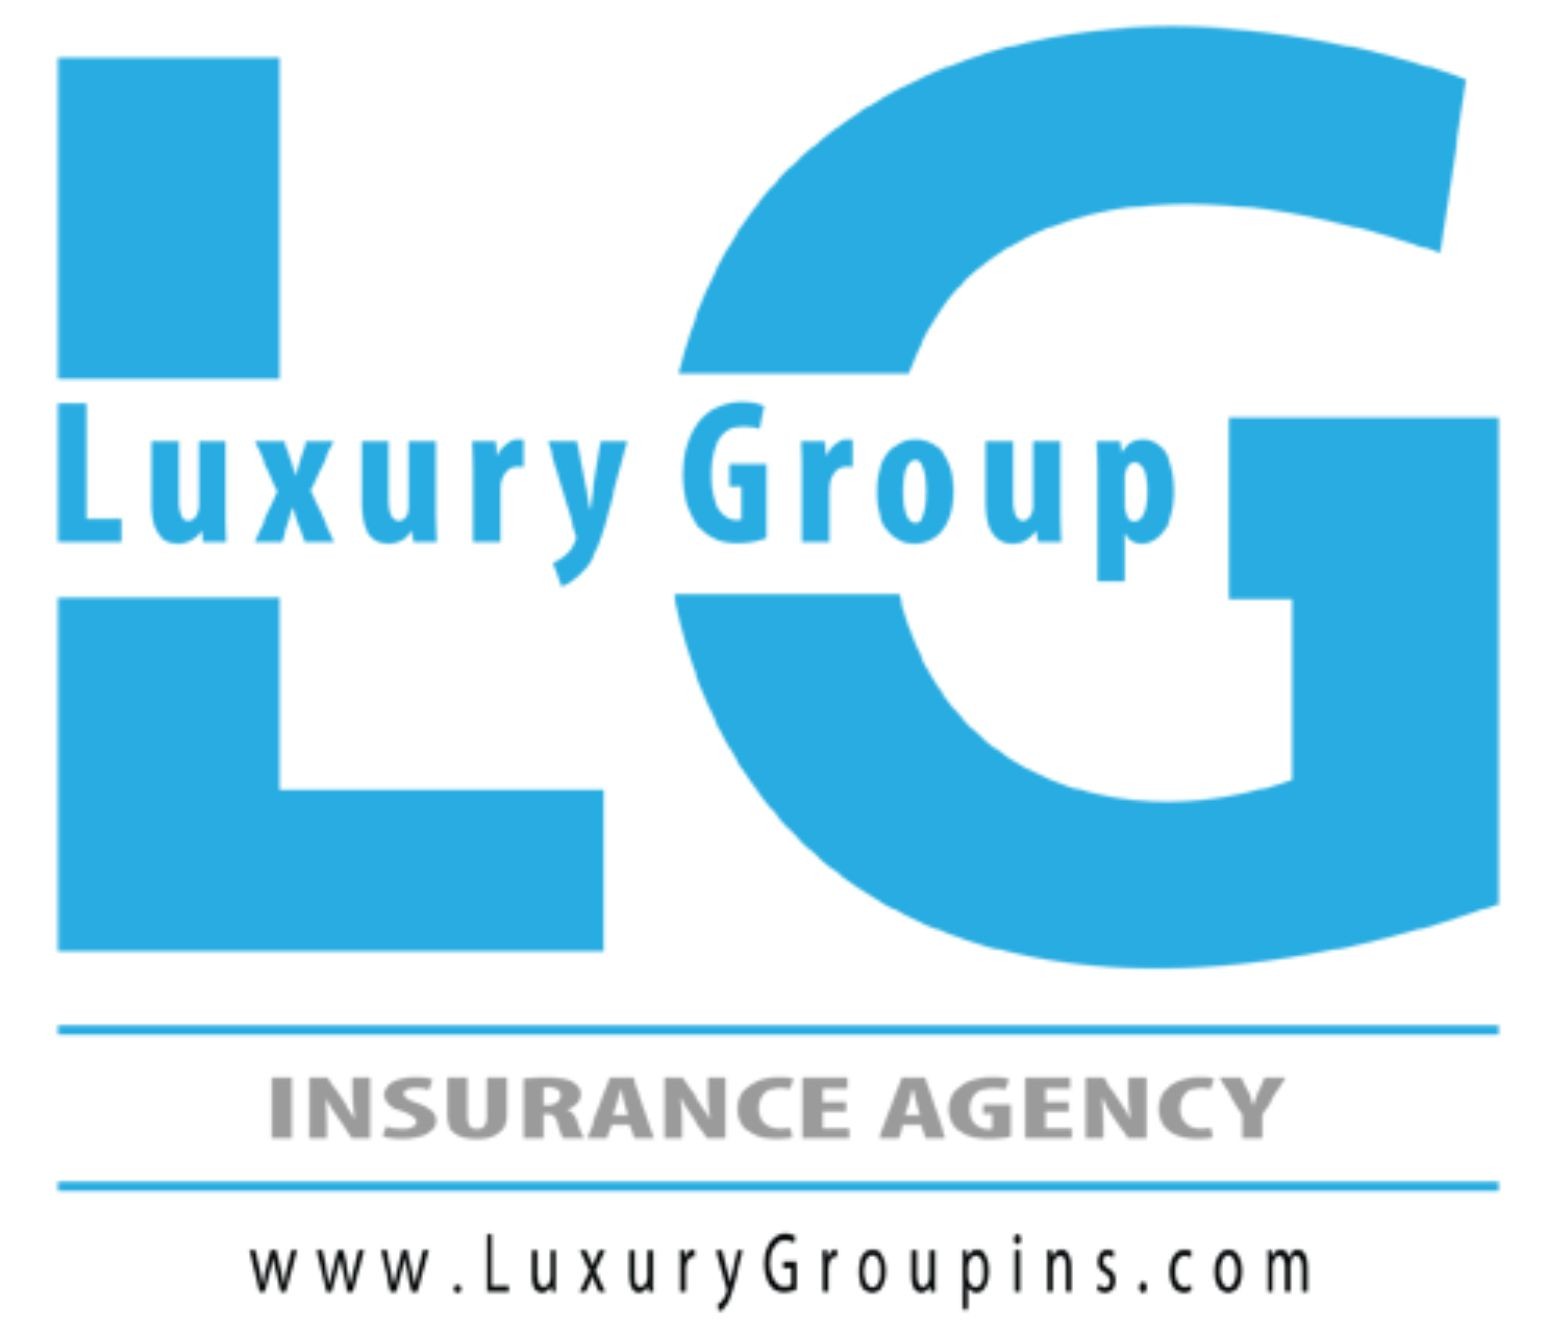 Luxury Group Insurance Agency